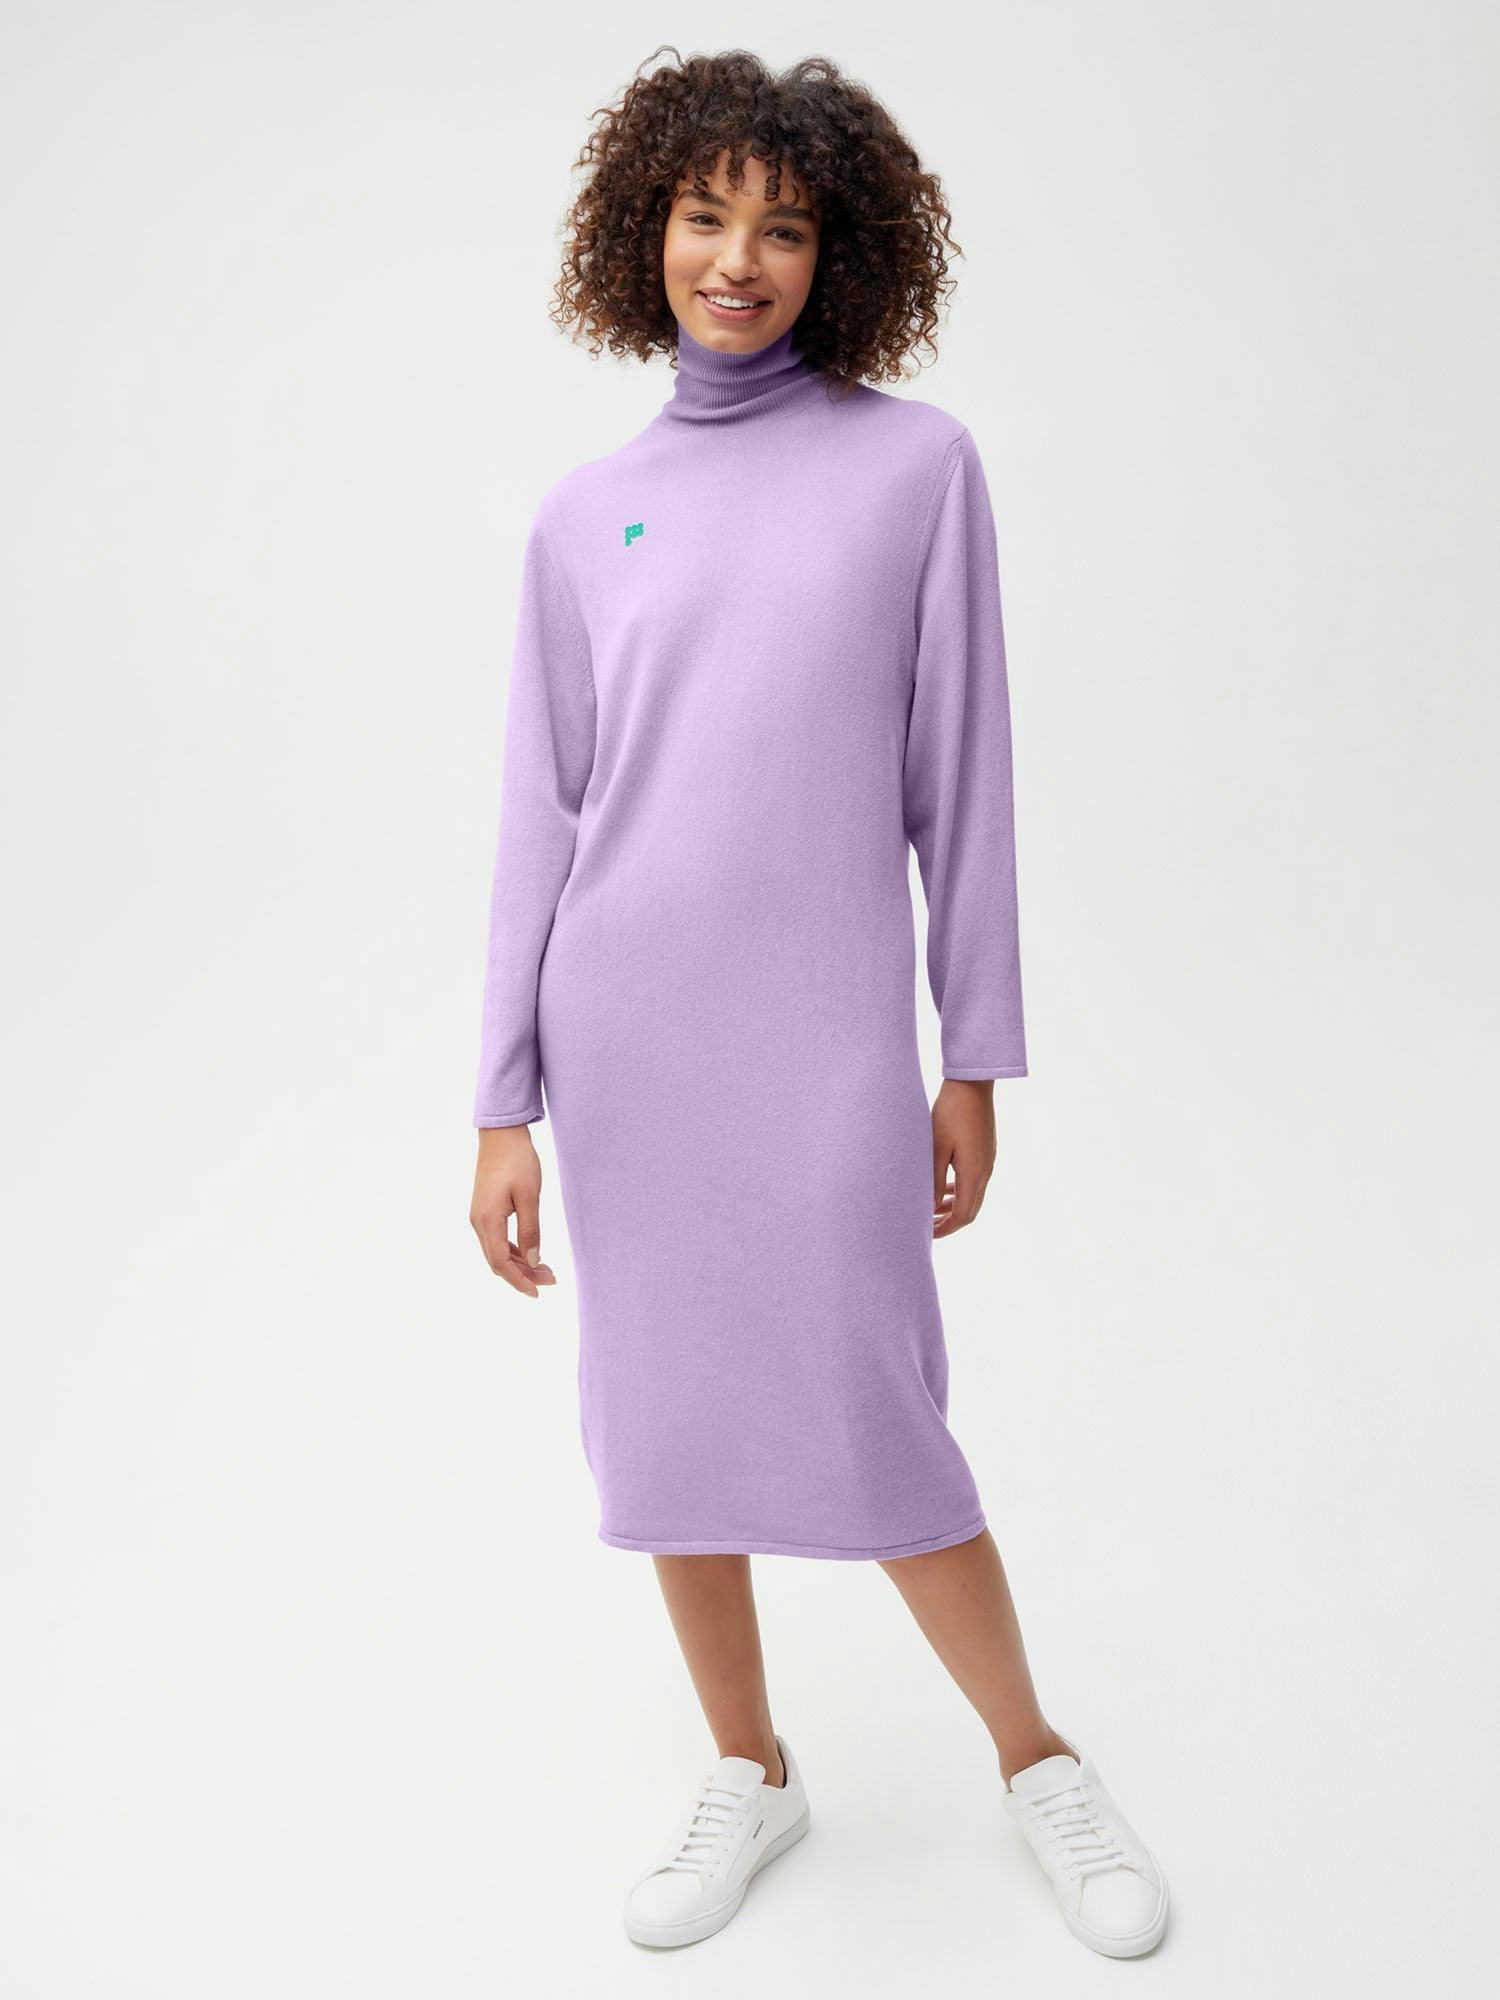 https://cdn.shopify.com/s/files/1/0035/1309/0115/products/Cashmere-Womens-Turtleneck-Dress-Orchid-Purple-Female-1.jpg?v=1662476046